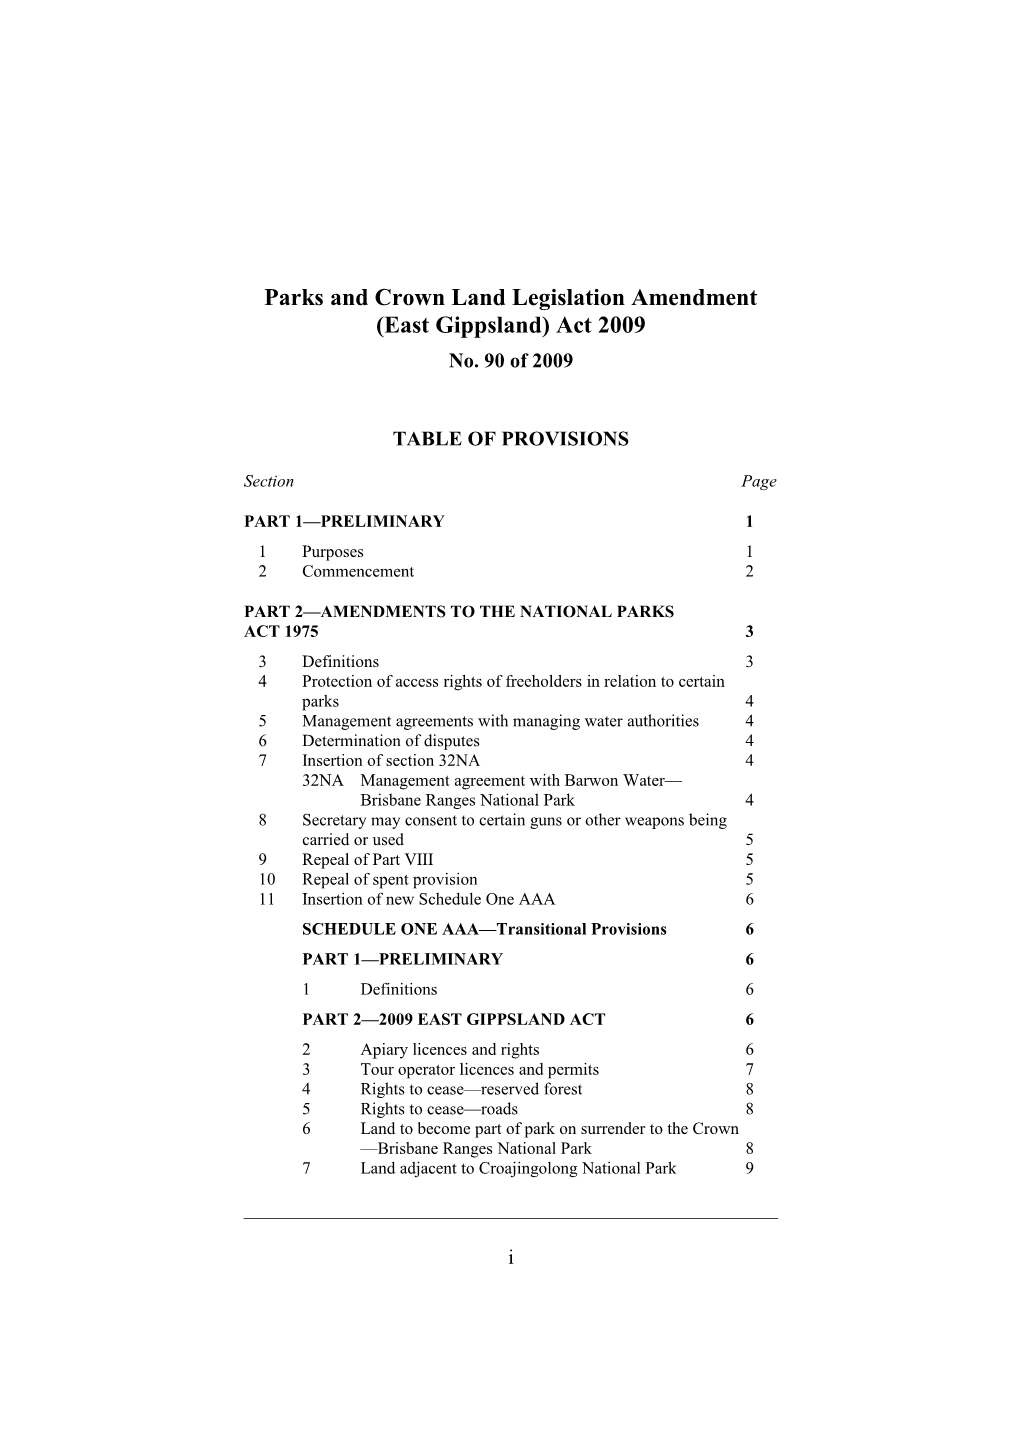 Parks and Crown Land Legislation Amendment (East Gippsland) Act 2009